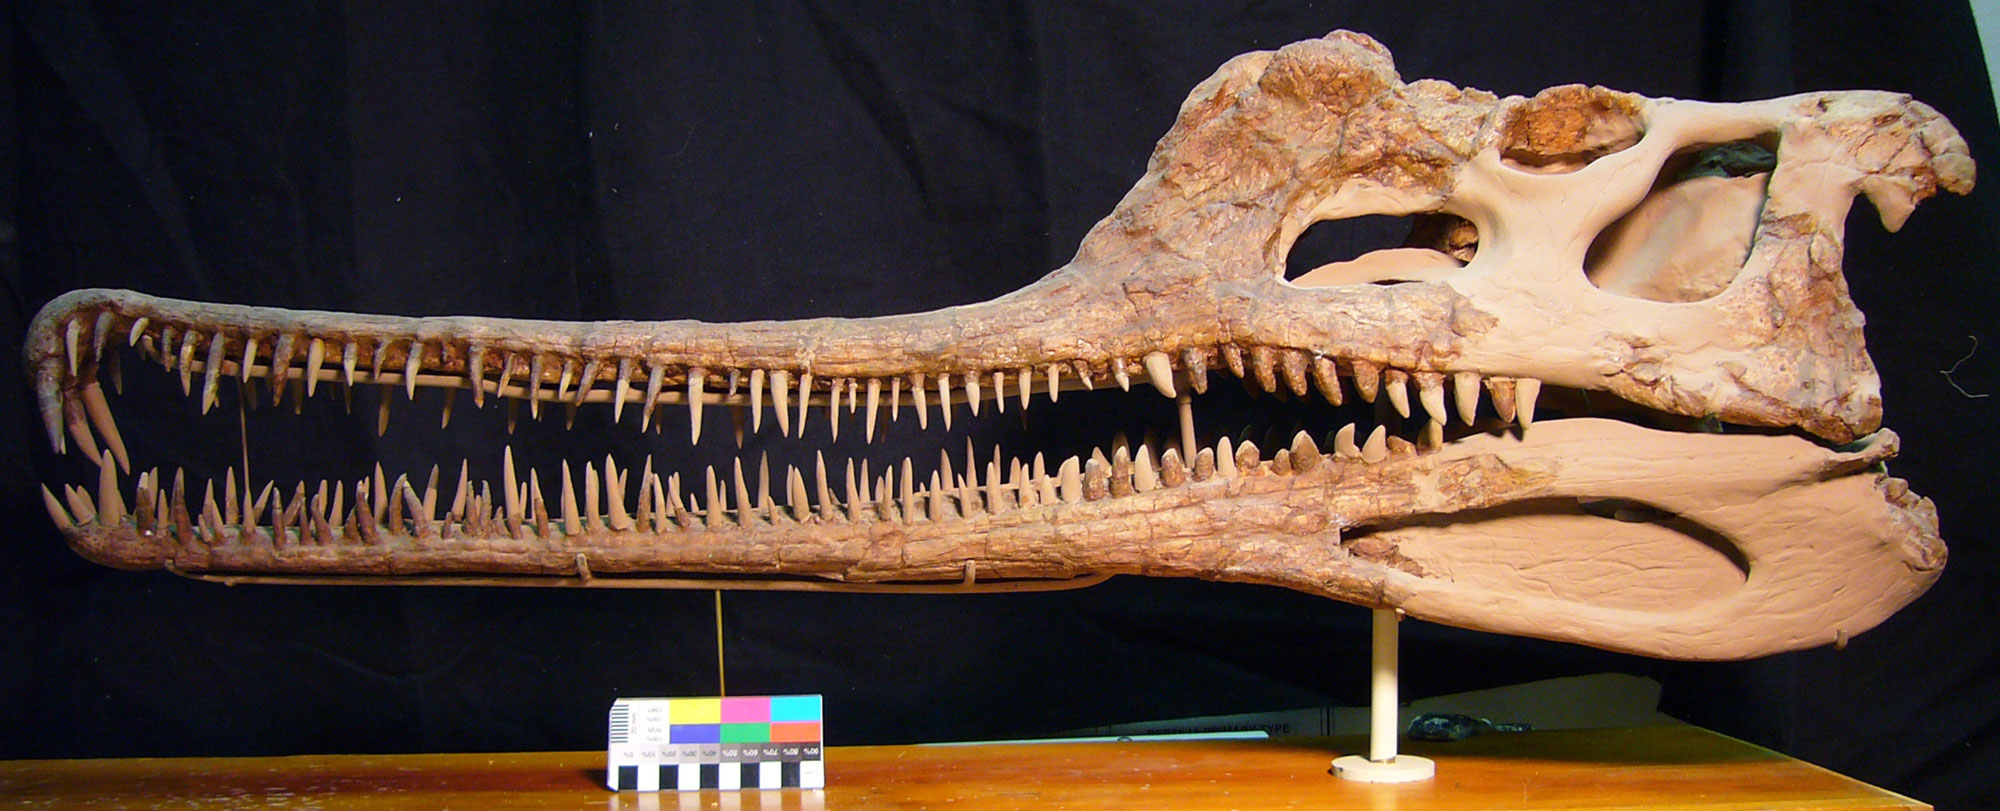 Photograph of a mounted skull of the phytosaur Rutiodon. The skull has long, narrow jaws and thin, pointed teeth.